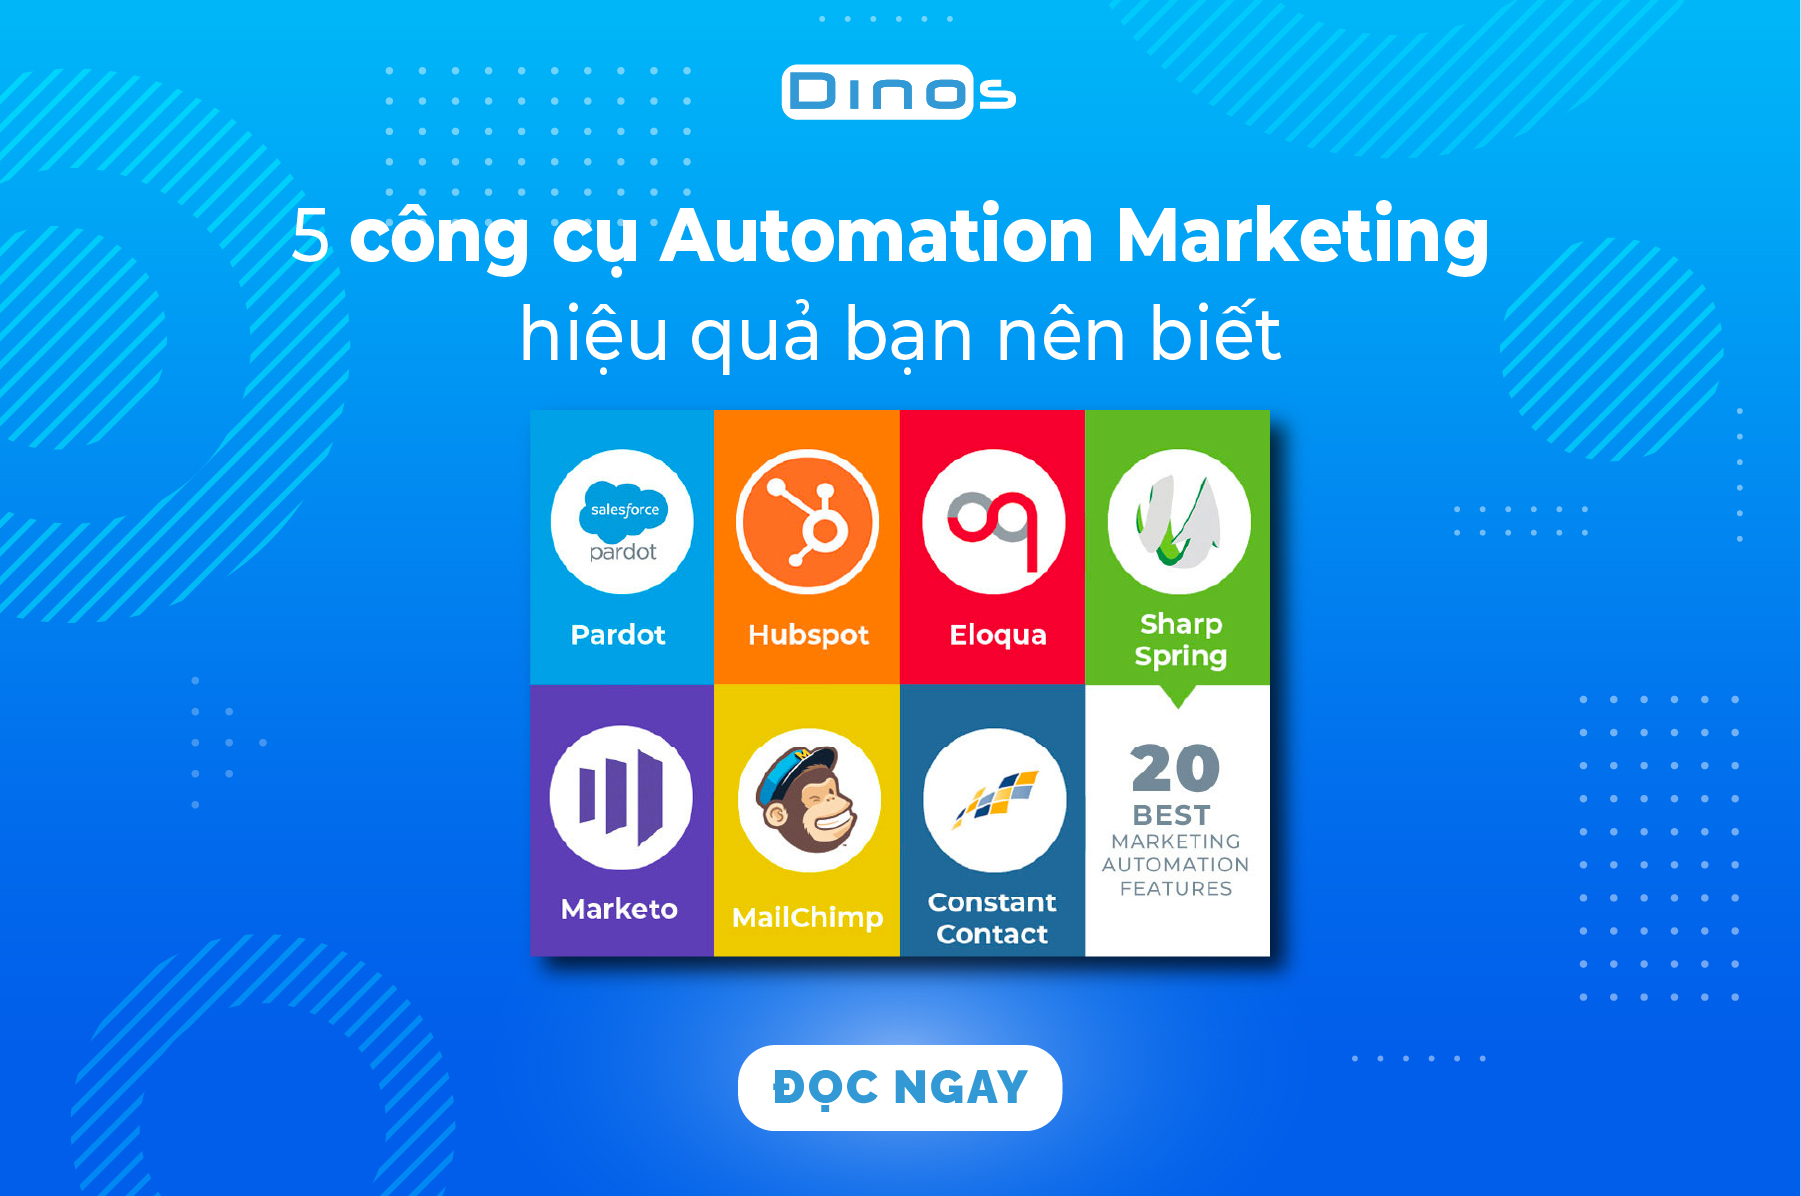 Công cụ Automation Marketing